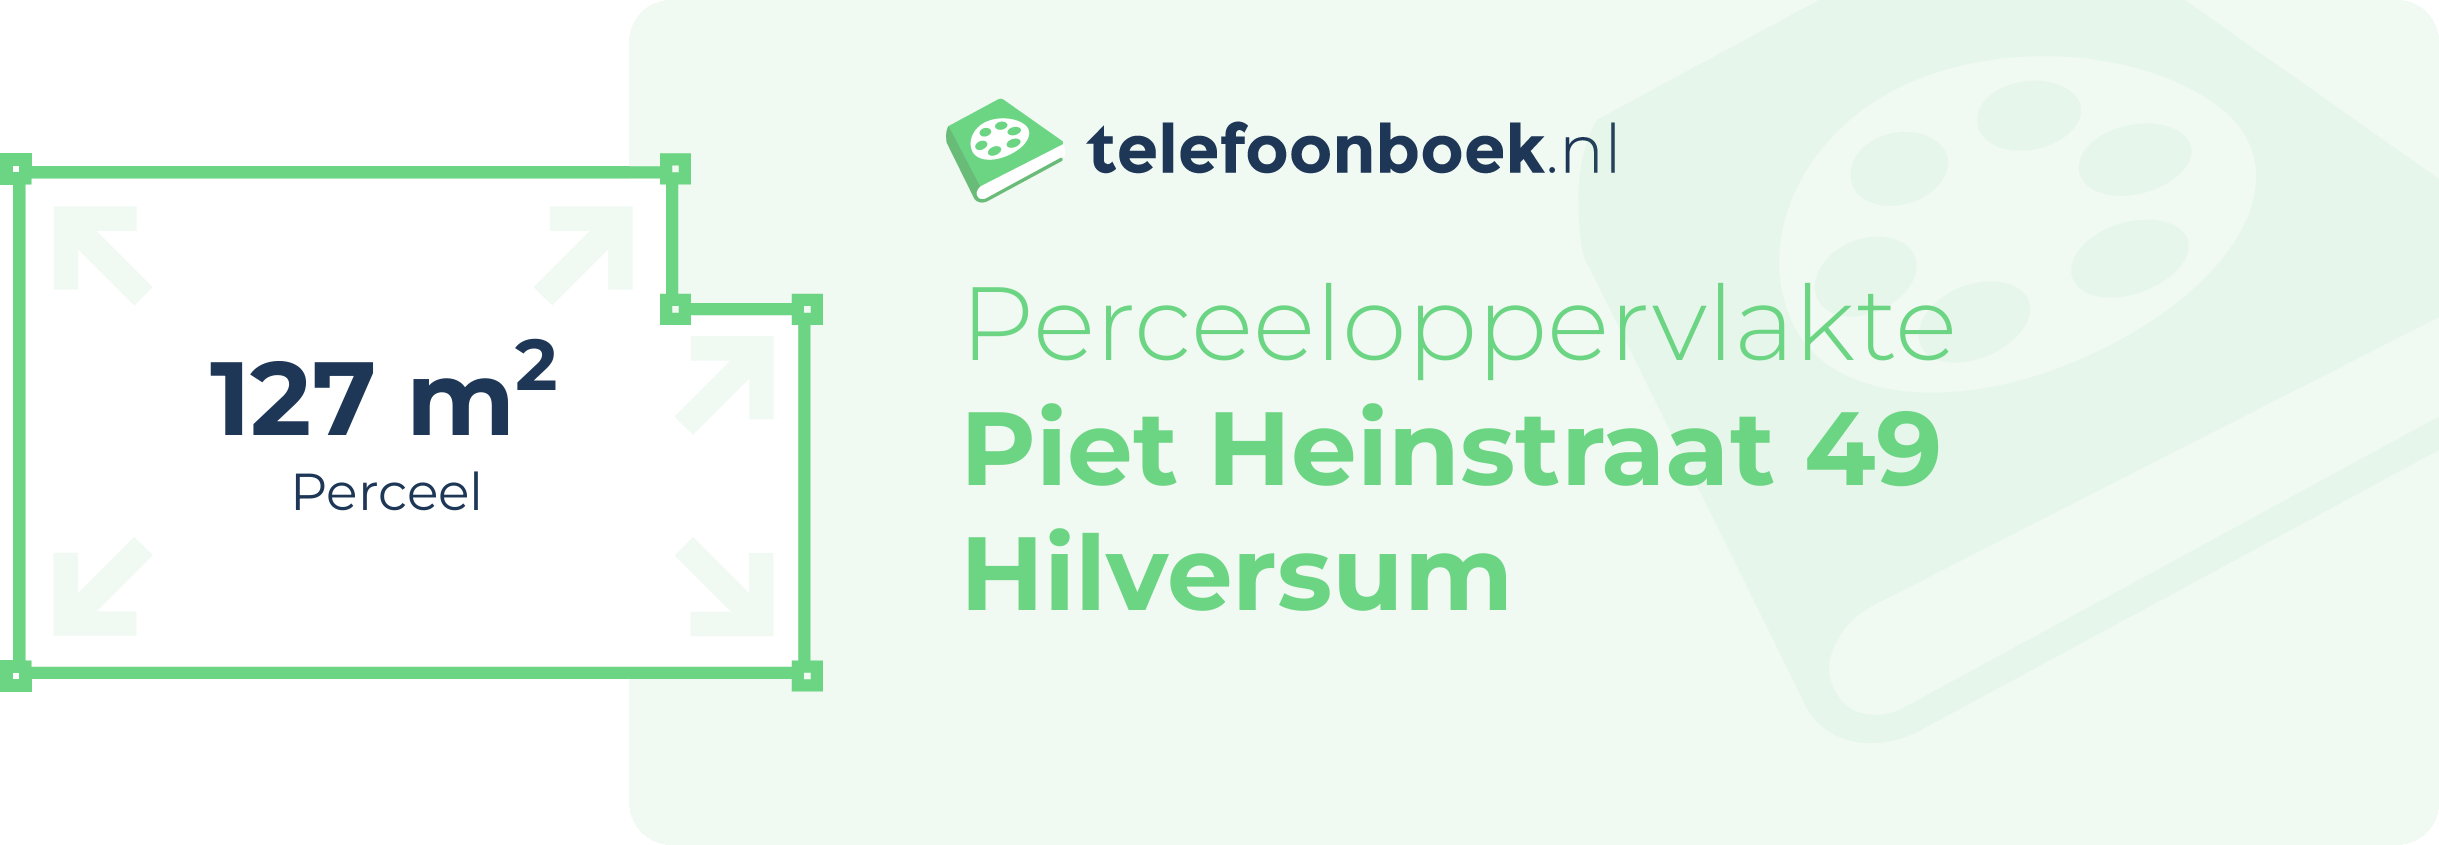 Perceeloppervlakte Piet Heinstraat 49 Hilversum